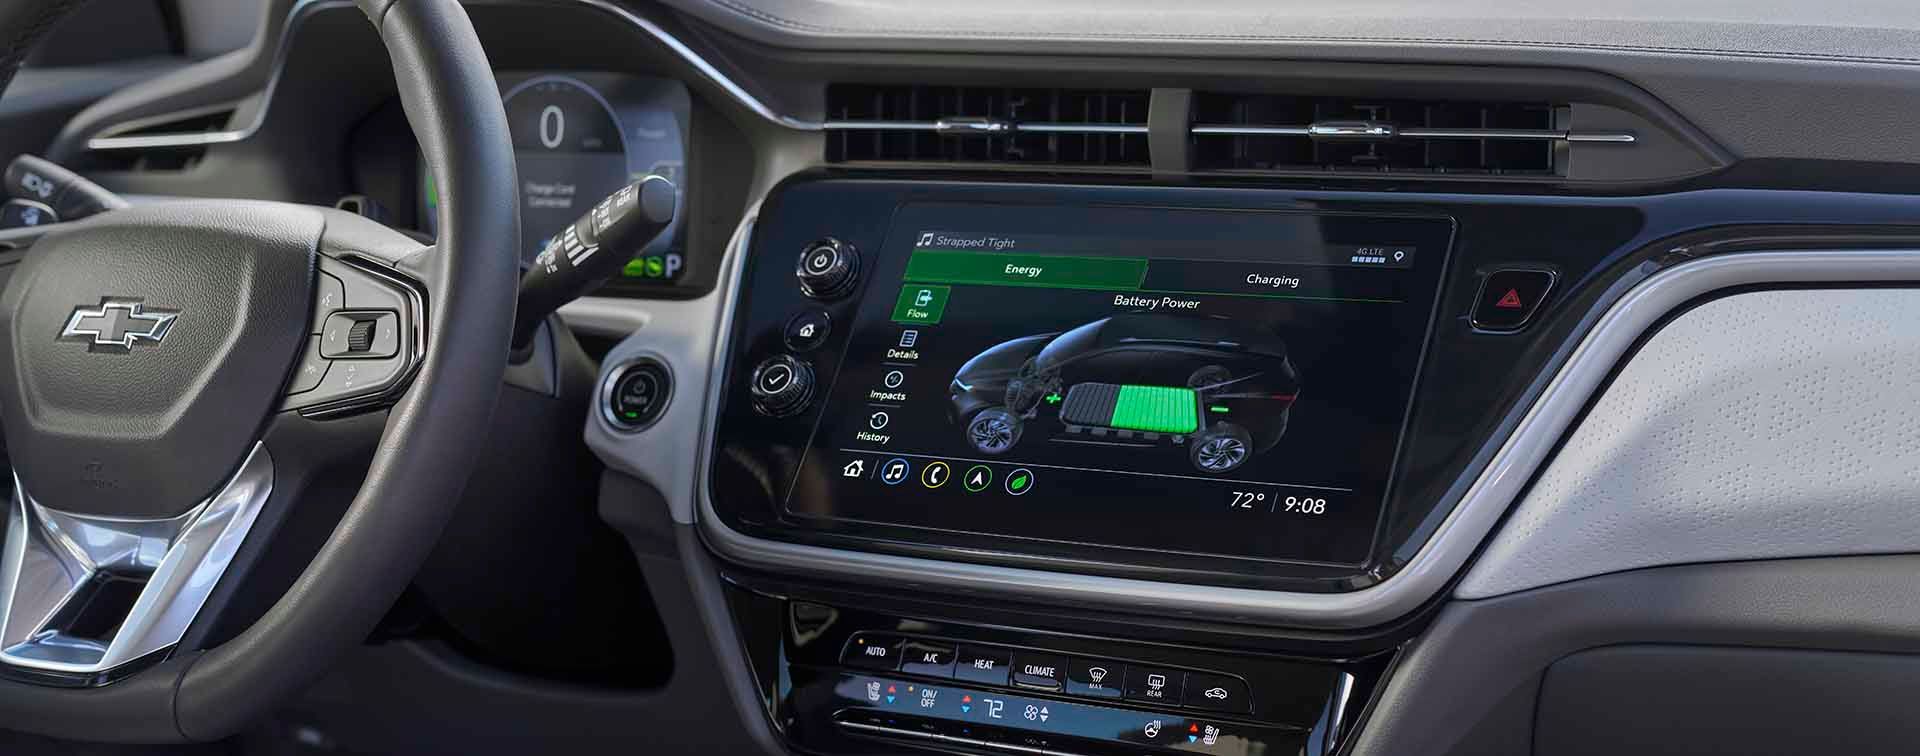 2022 Chevrolet Bolt EUV infotainment system